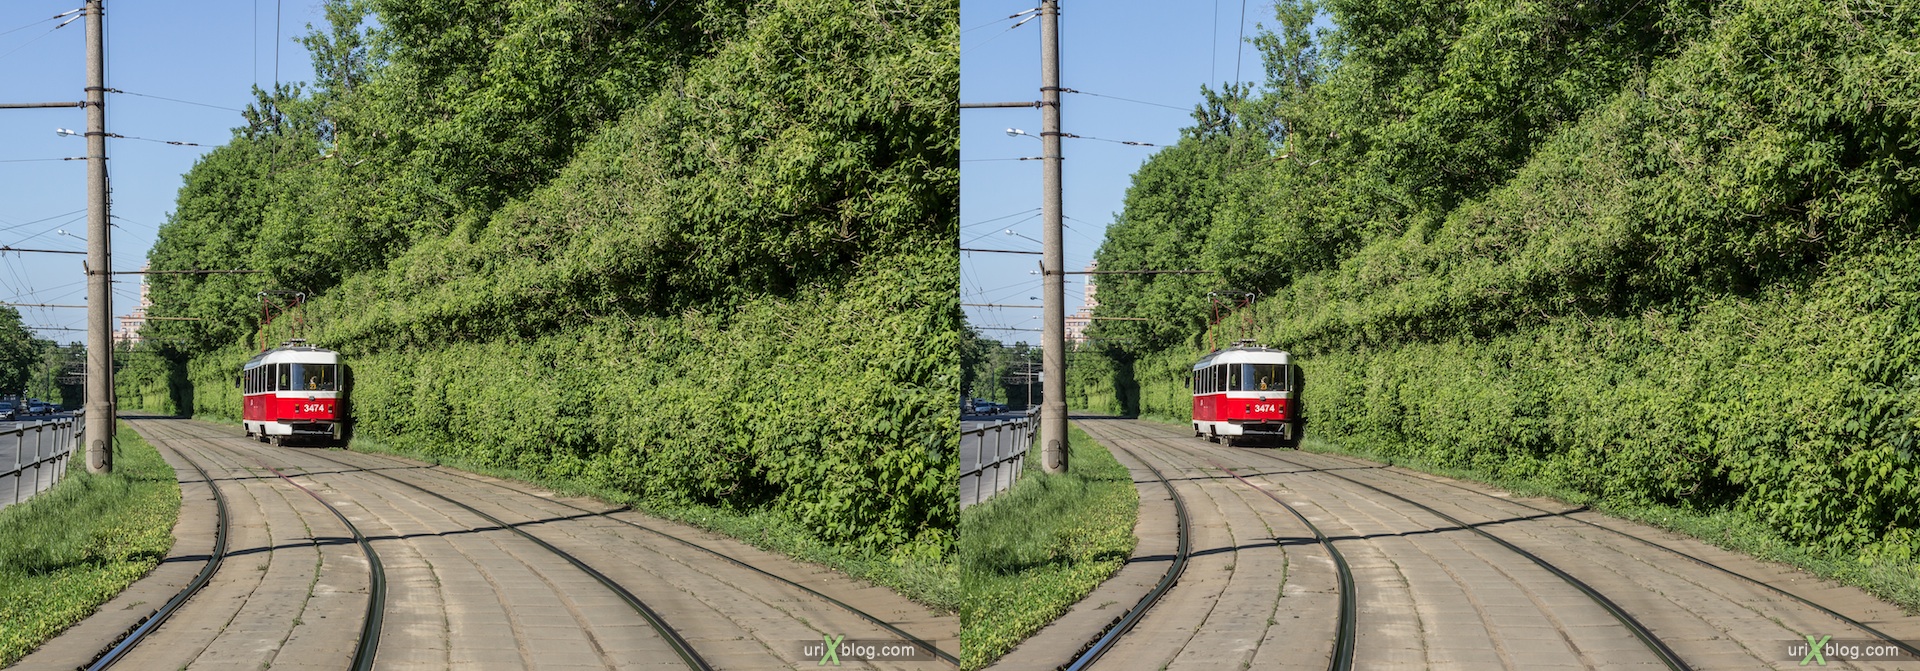 2013, Tram, line, railway, trees, forrest, road, Voykovskaya, Shukinskaya, Moscow, Russia, 3D, stereo pair, cross-eyed, crossview, cross view stereo pair, stereoscopic